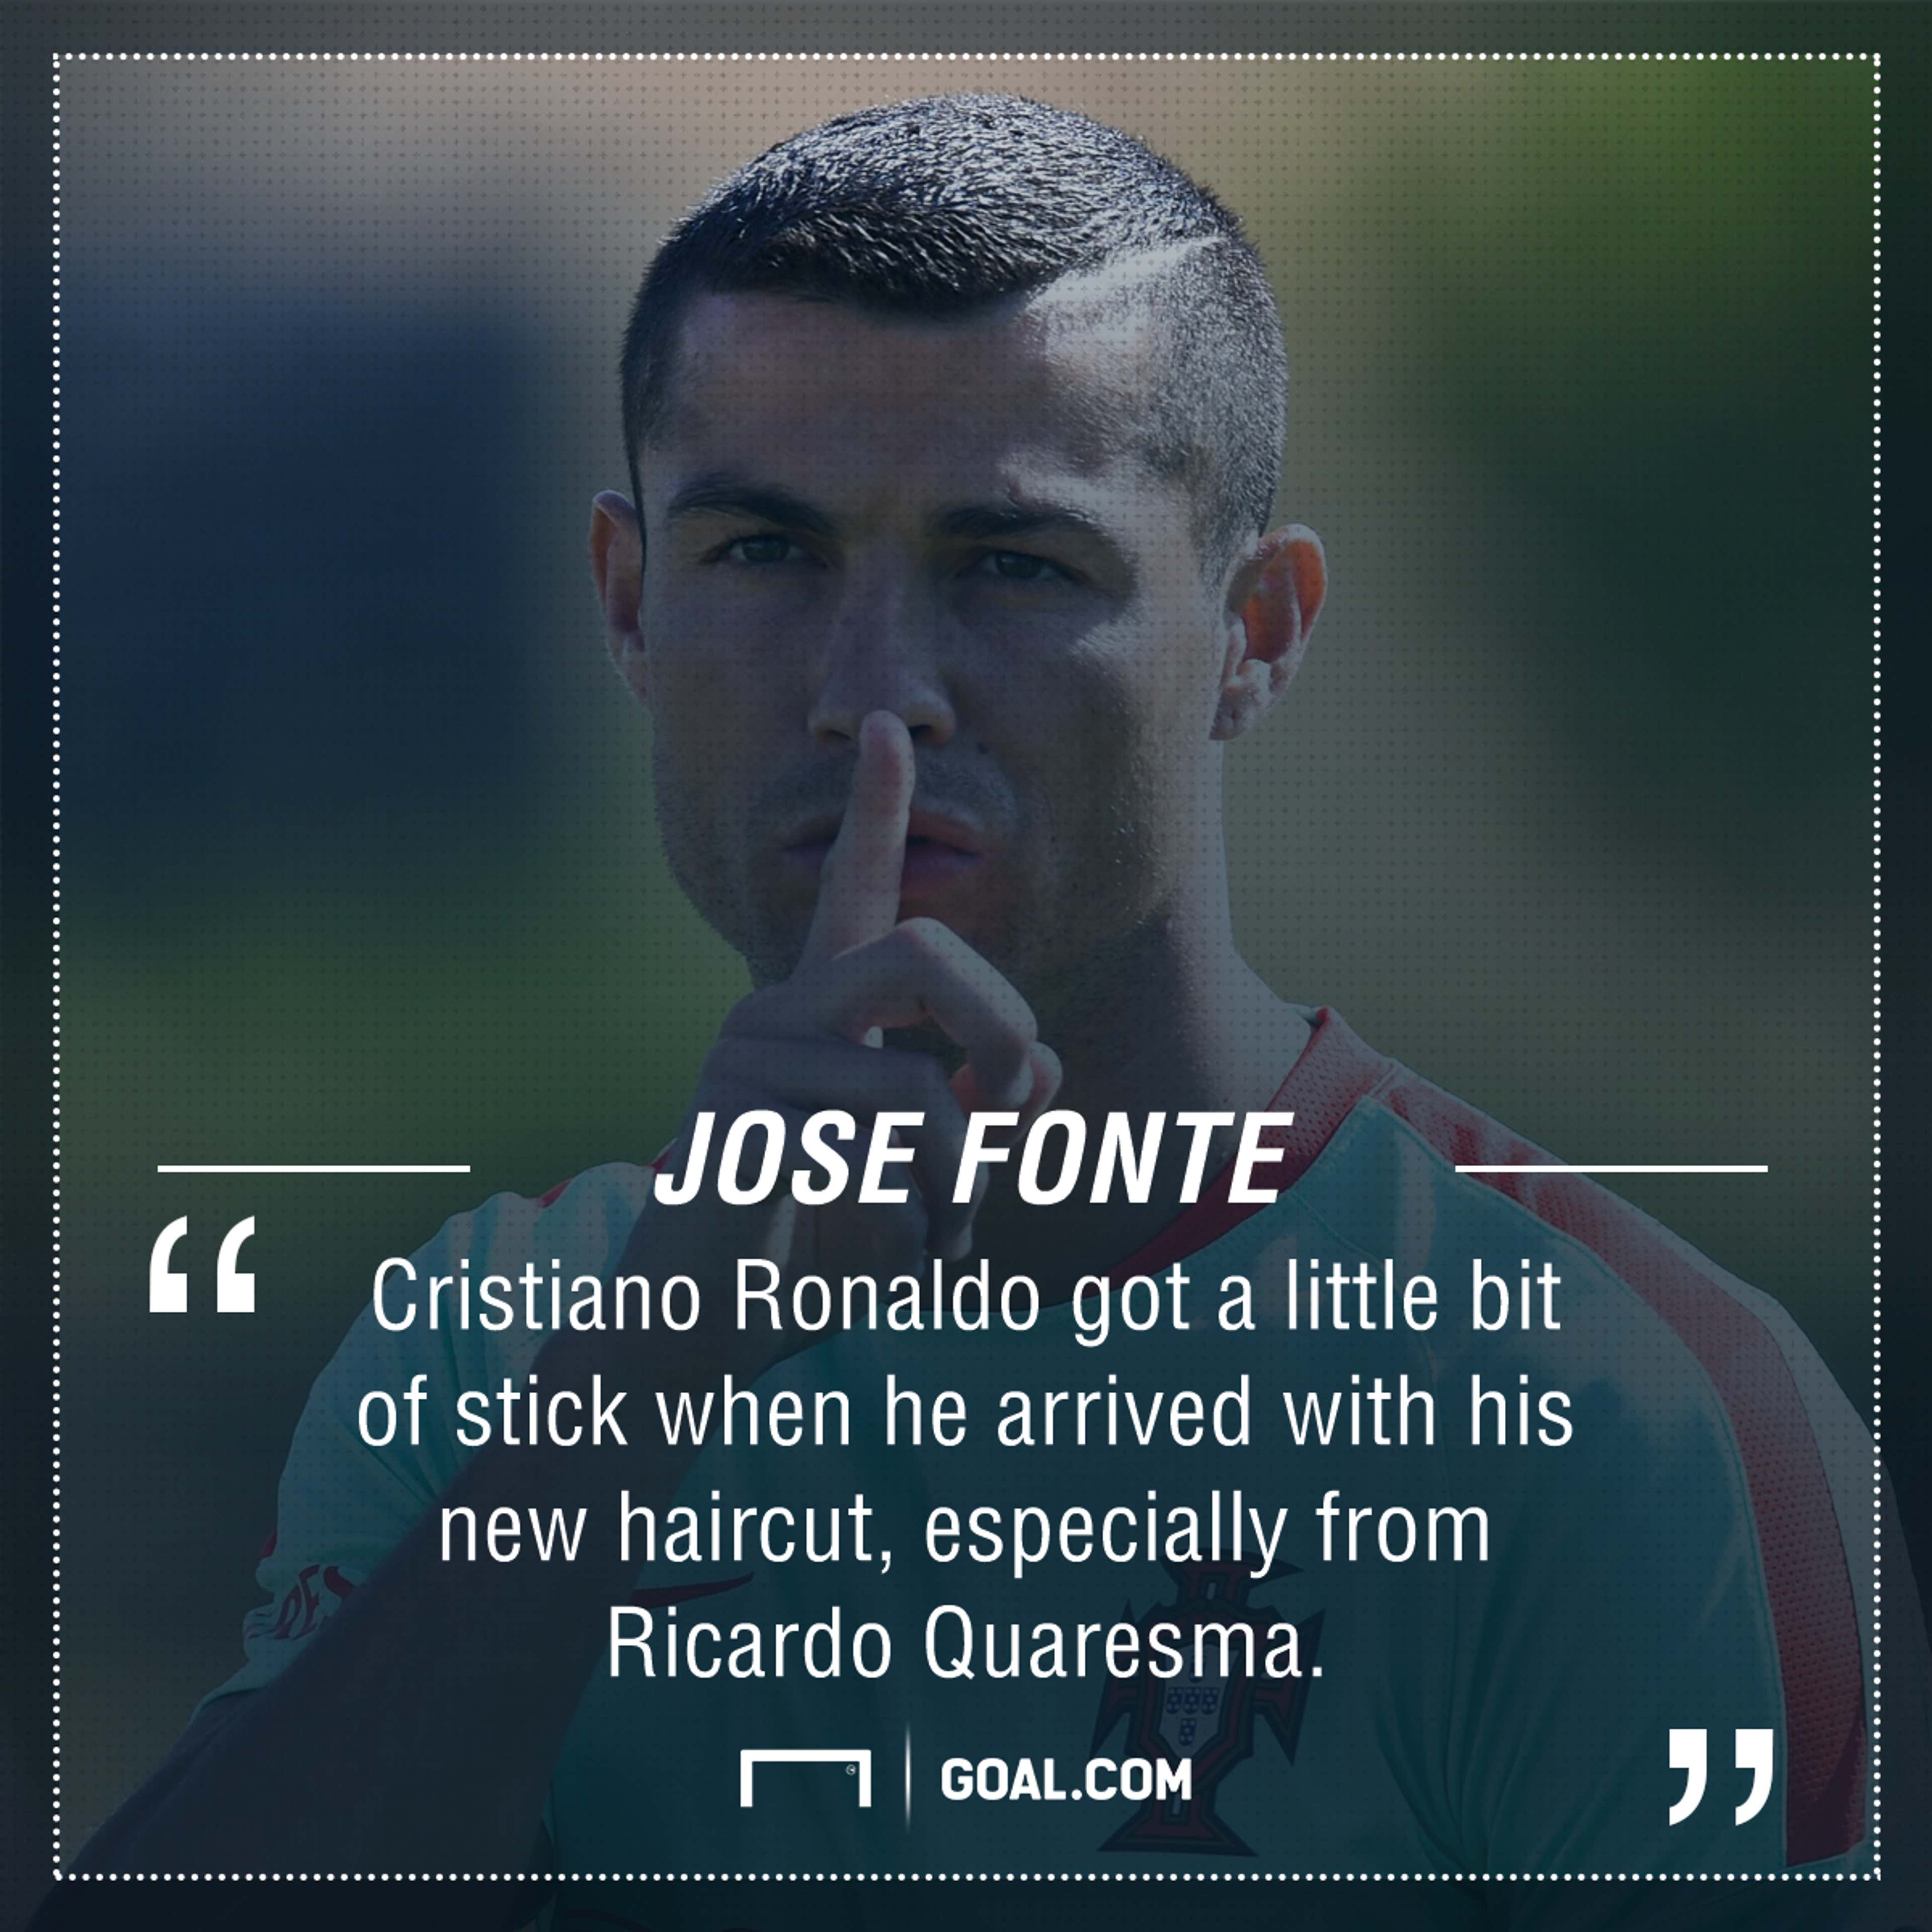 Cristiano Ronaldo Jose Fonte haircut